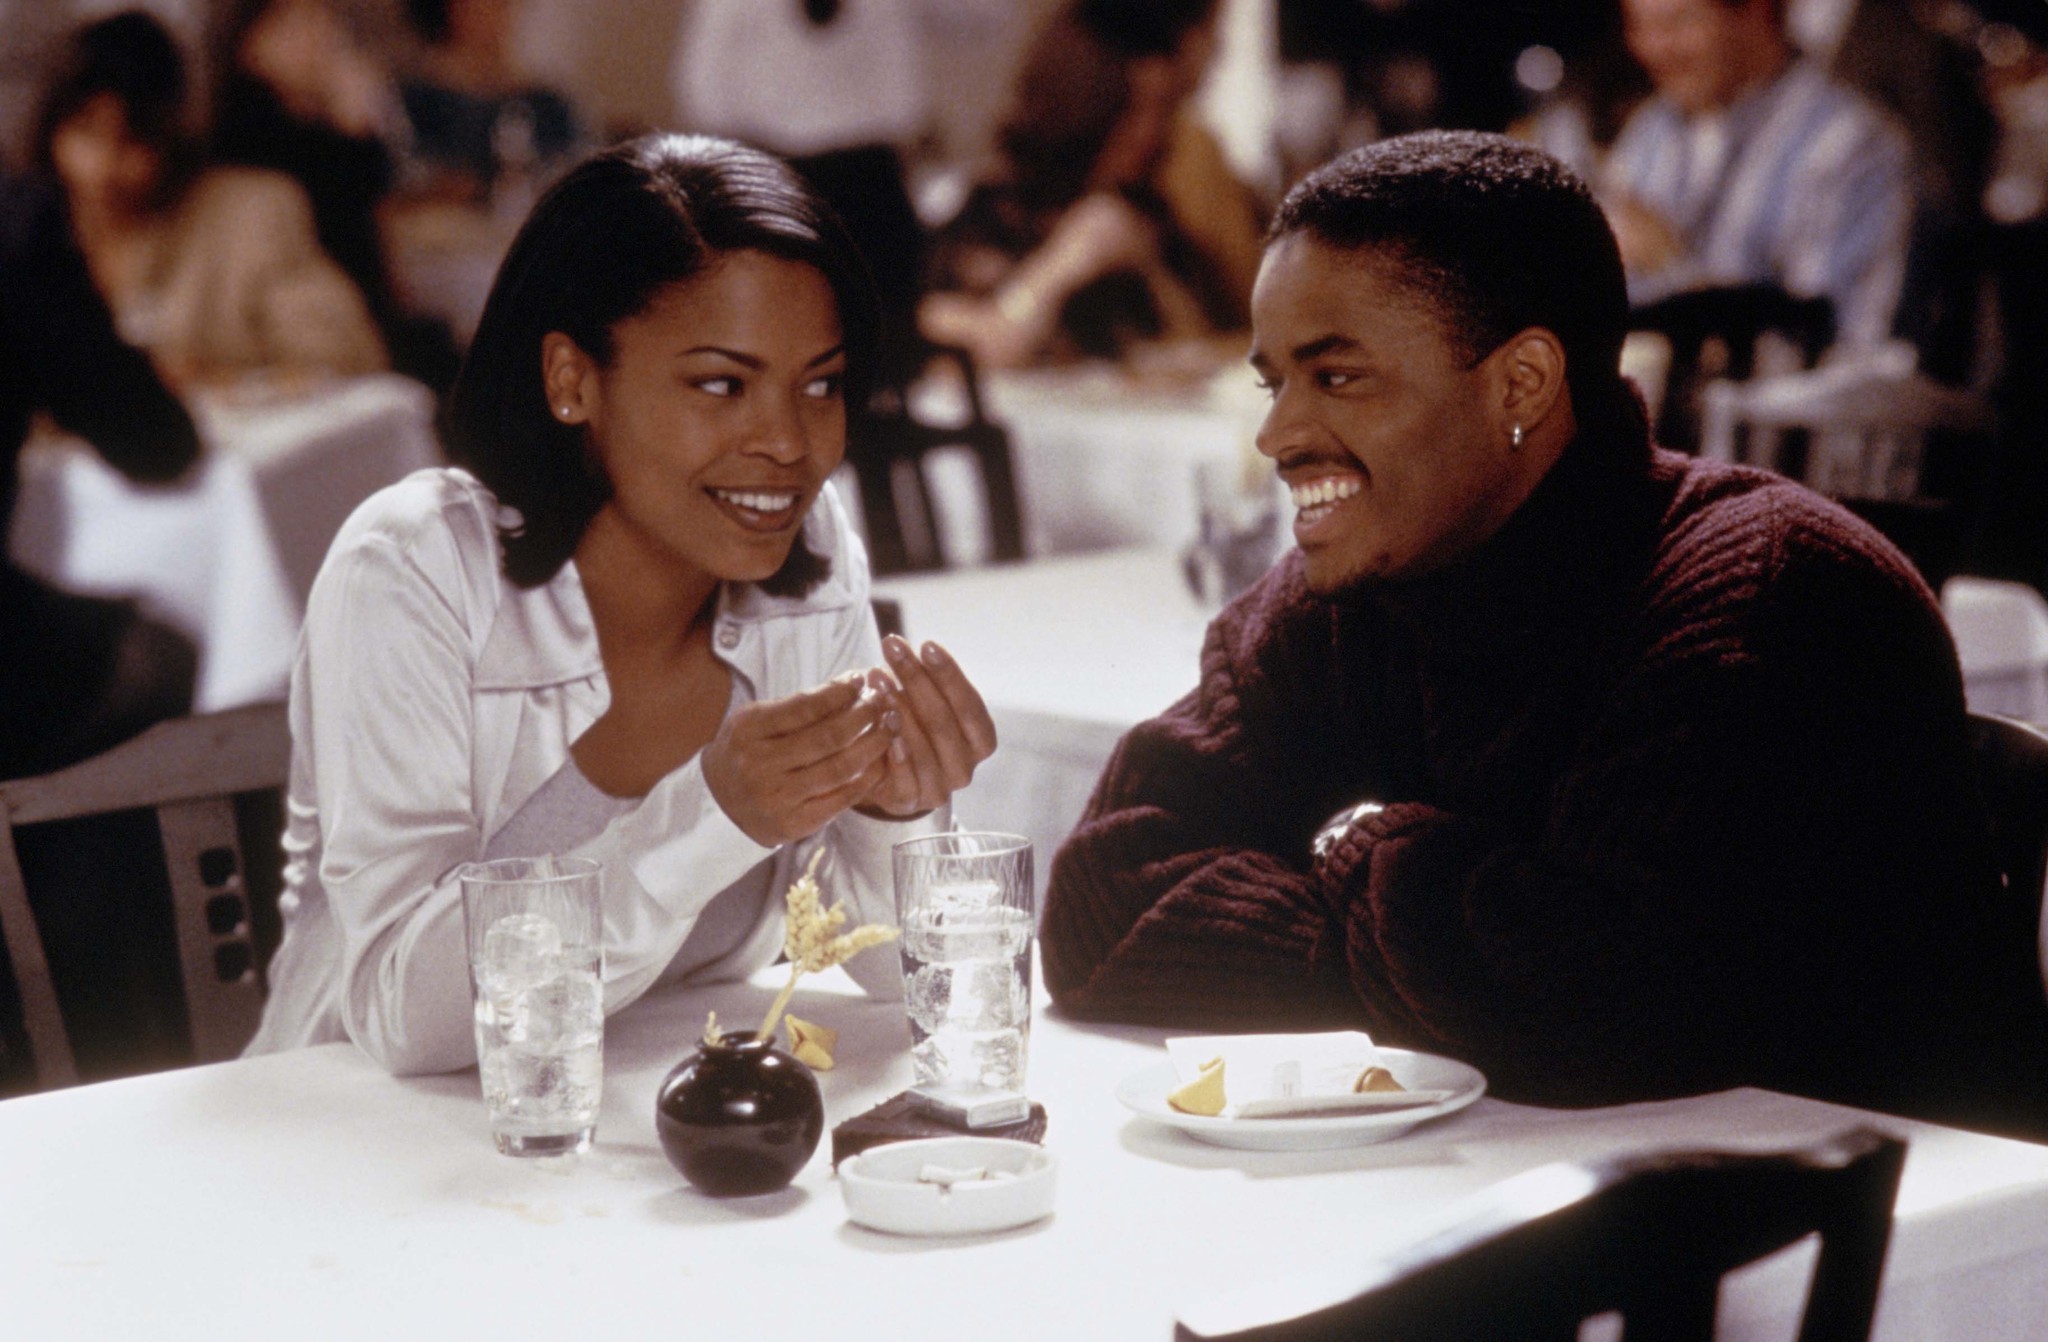 Still of Nia Long and Larenz Tate in Love Jones (1997)